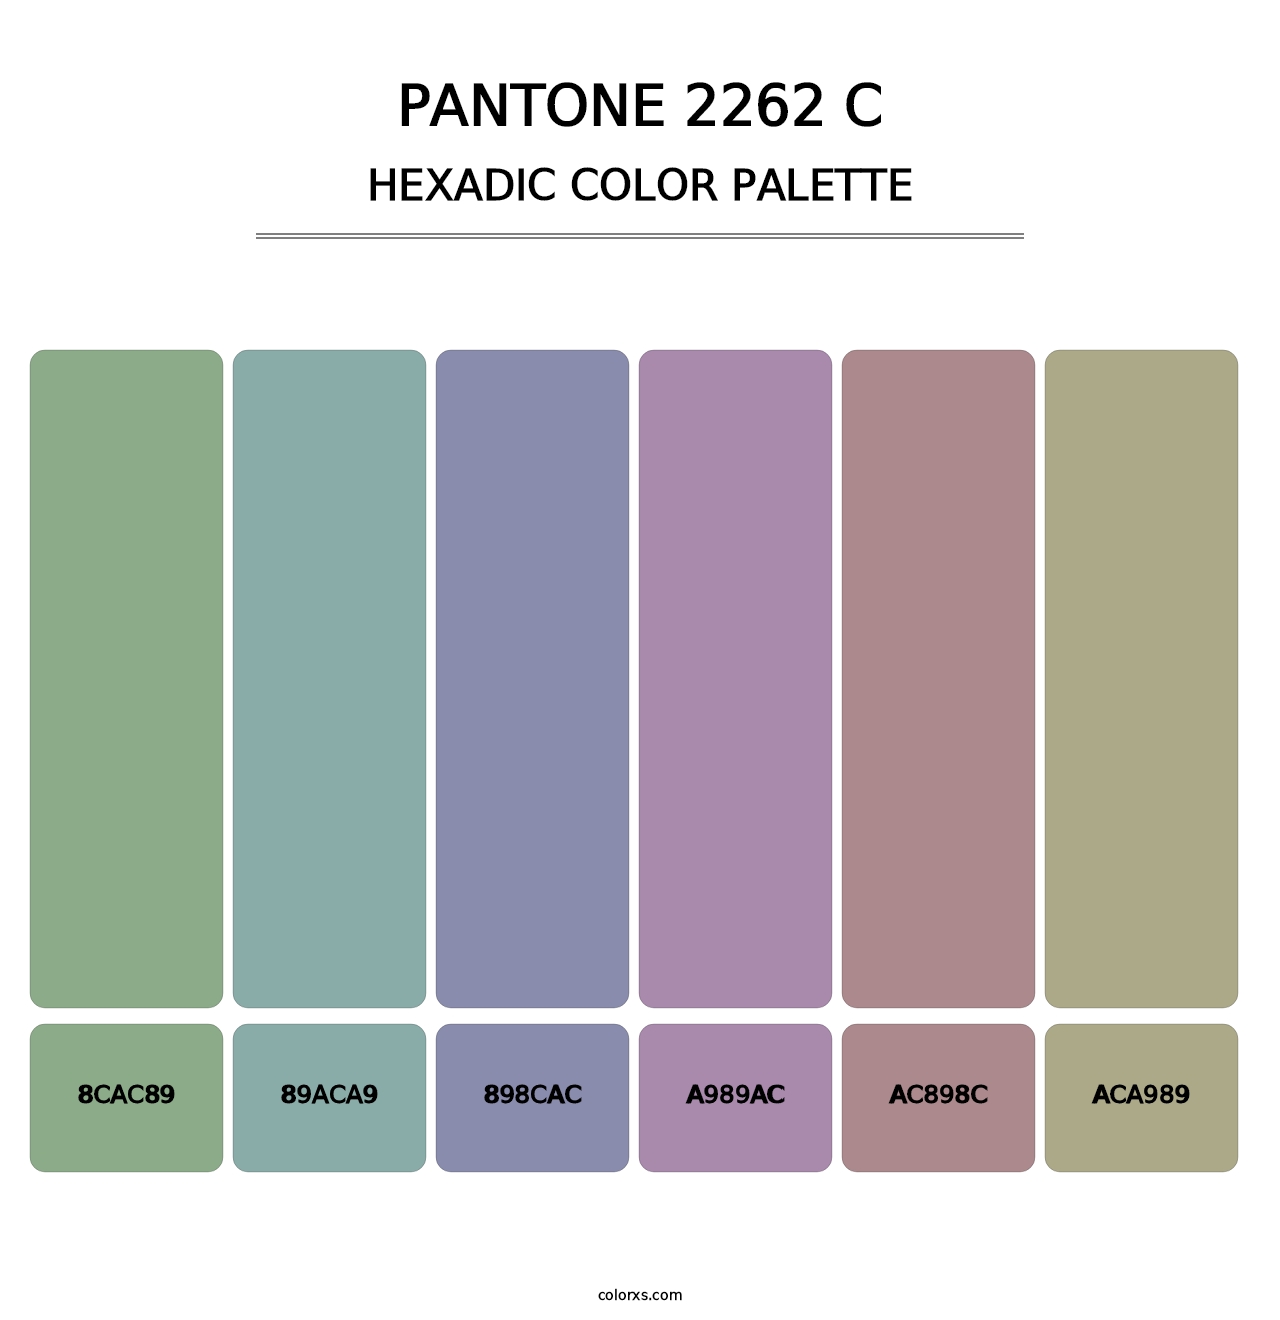 PANTONE 2262 C - Hexadic Color Palette